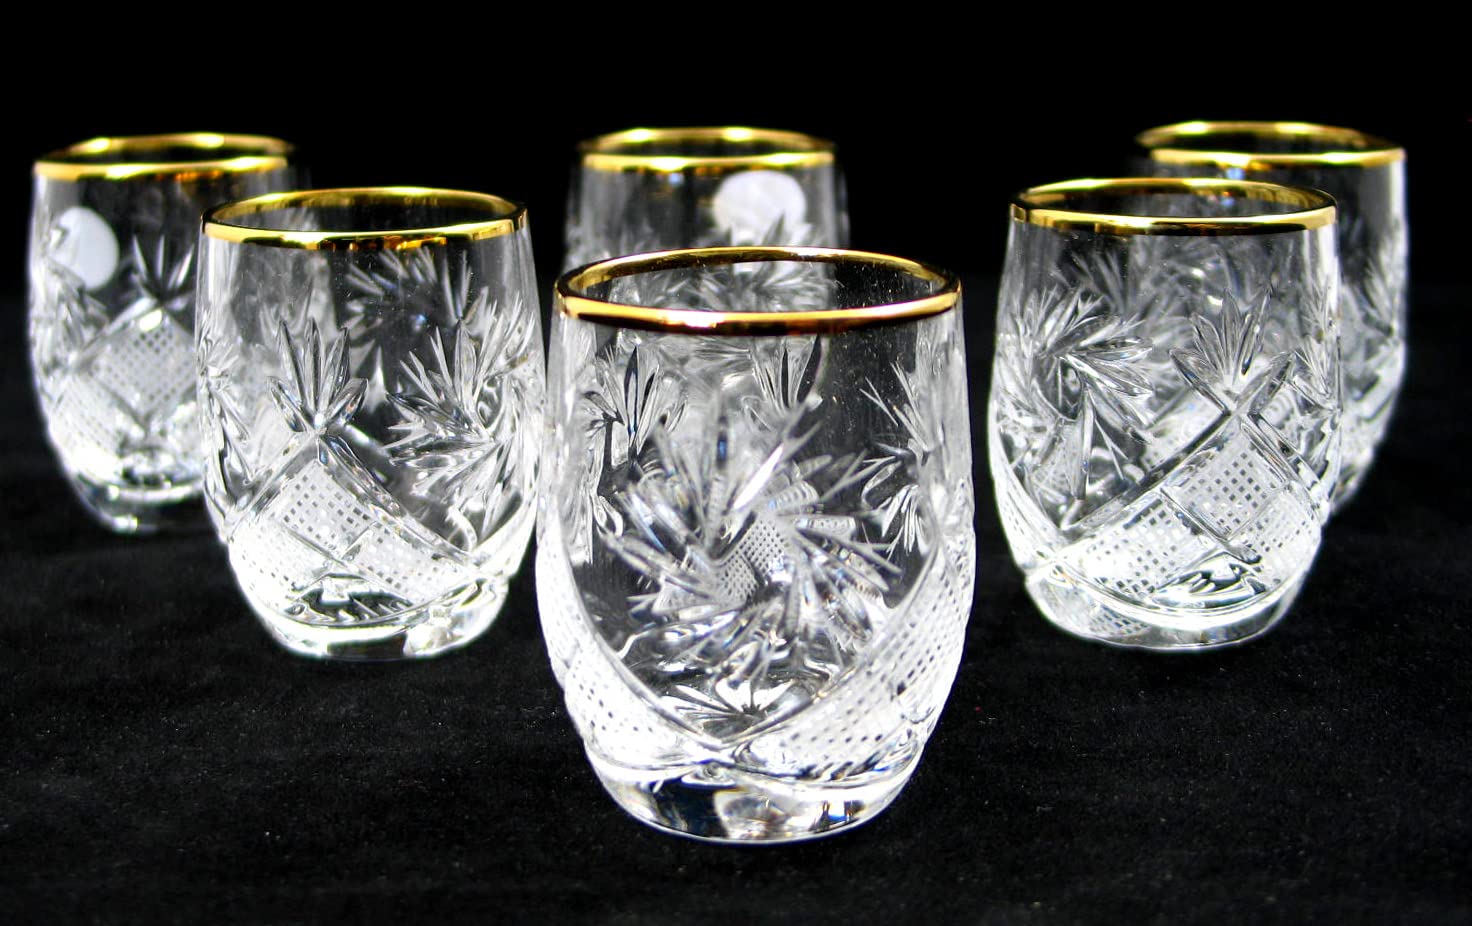 SET of 6 Russian Cut Crystal Shot Shooter Glasses 24K Gold Rimmed 1.7 Oz. Vodka Liquor Old-fashioned Glassware Hand Made